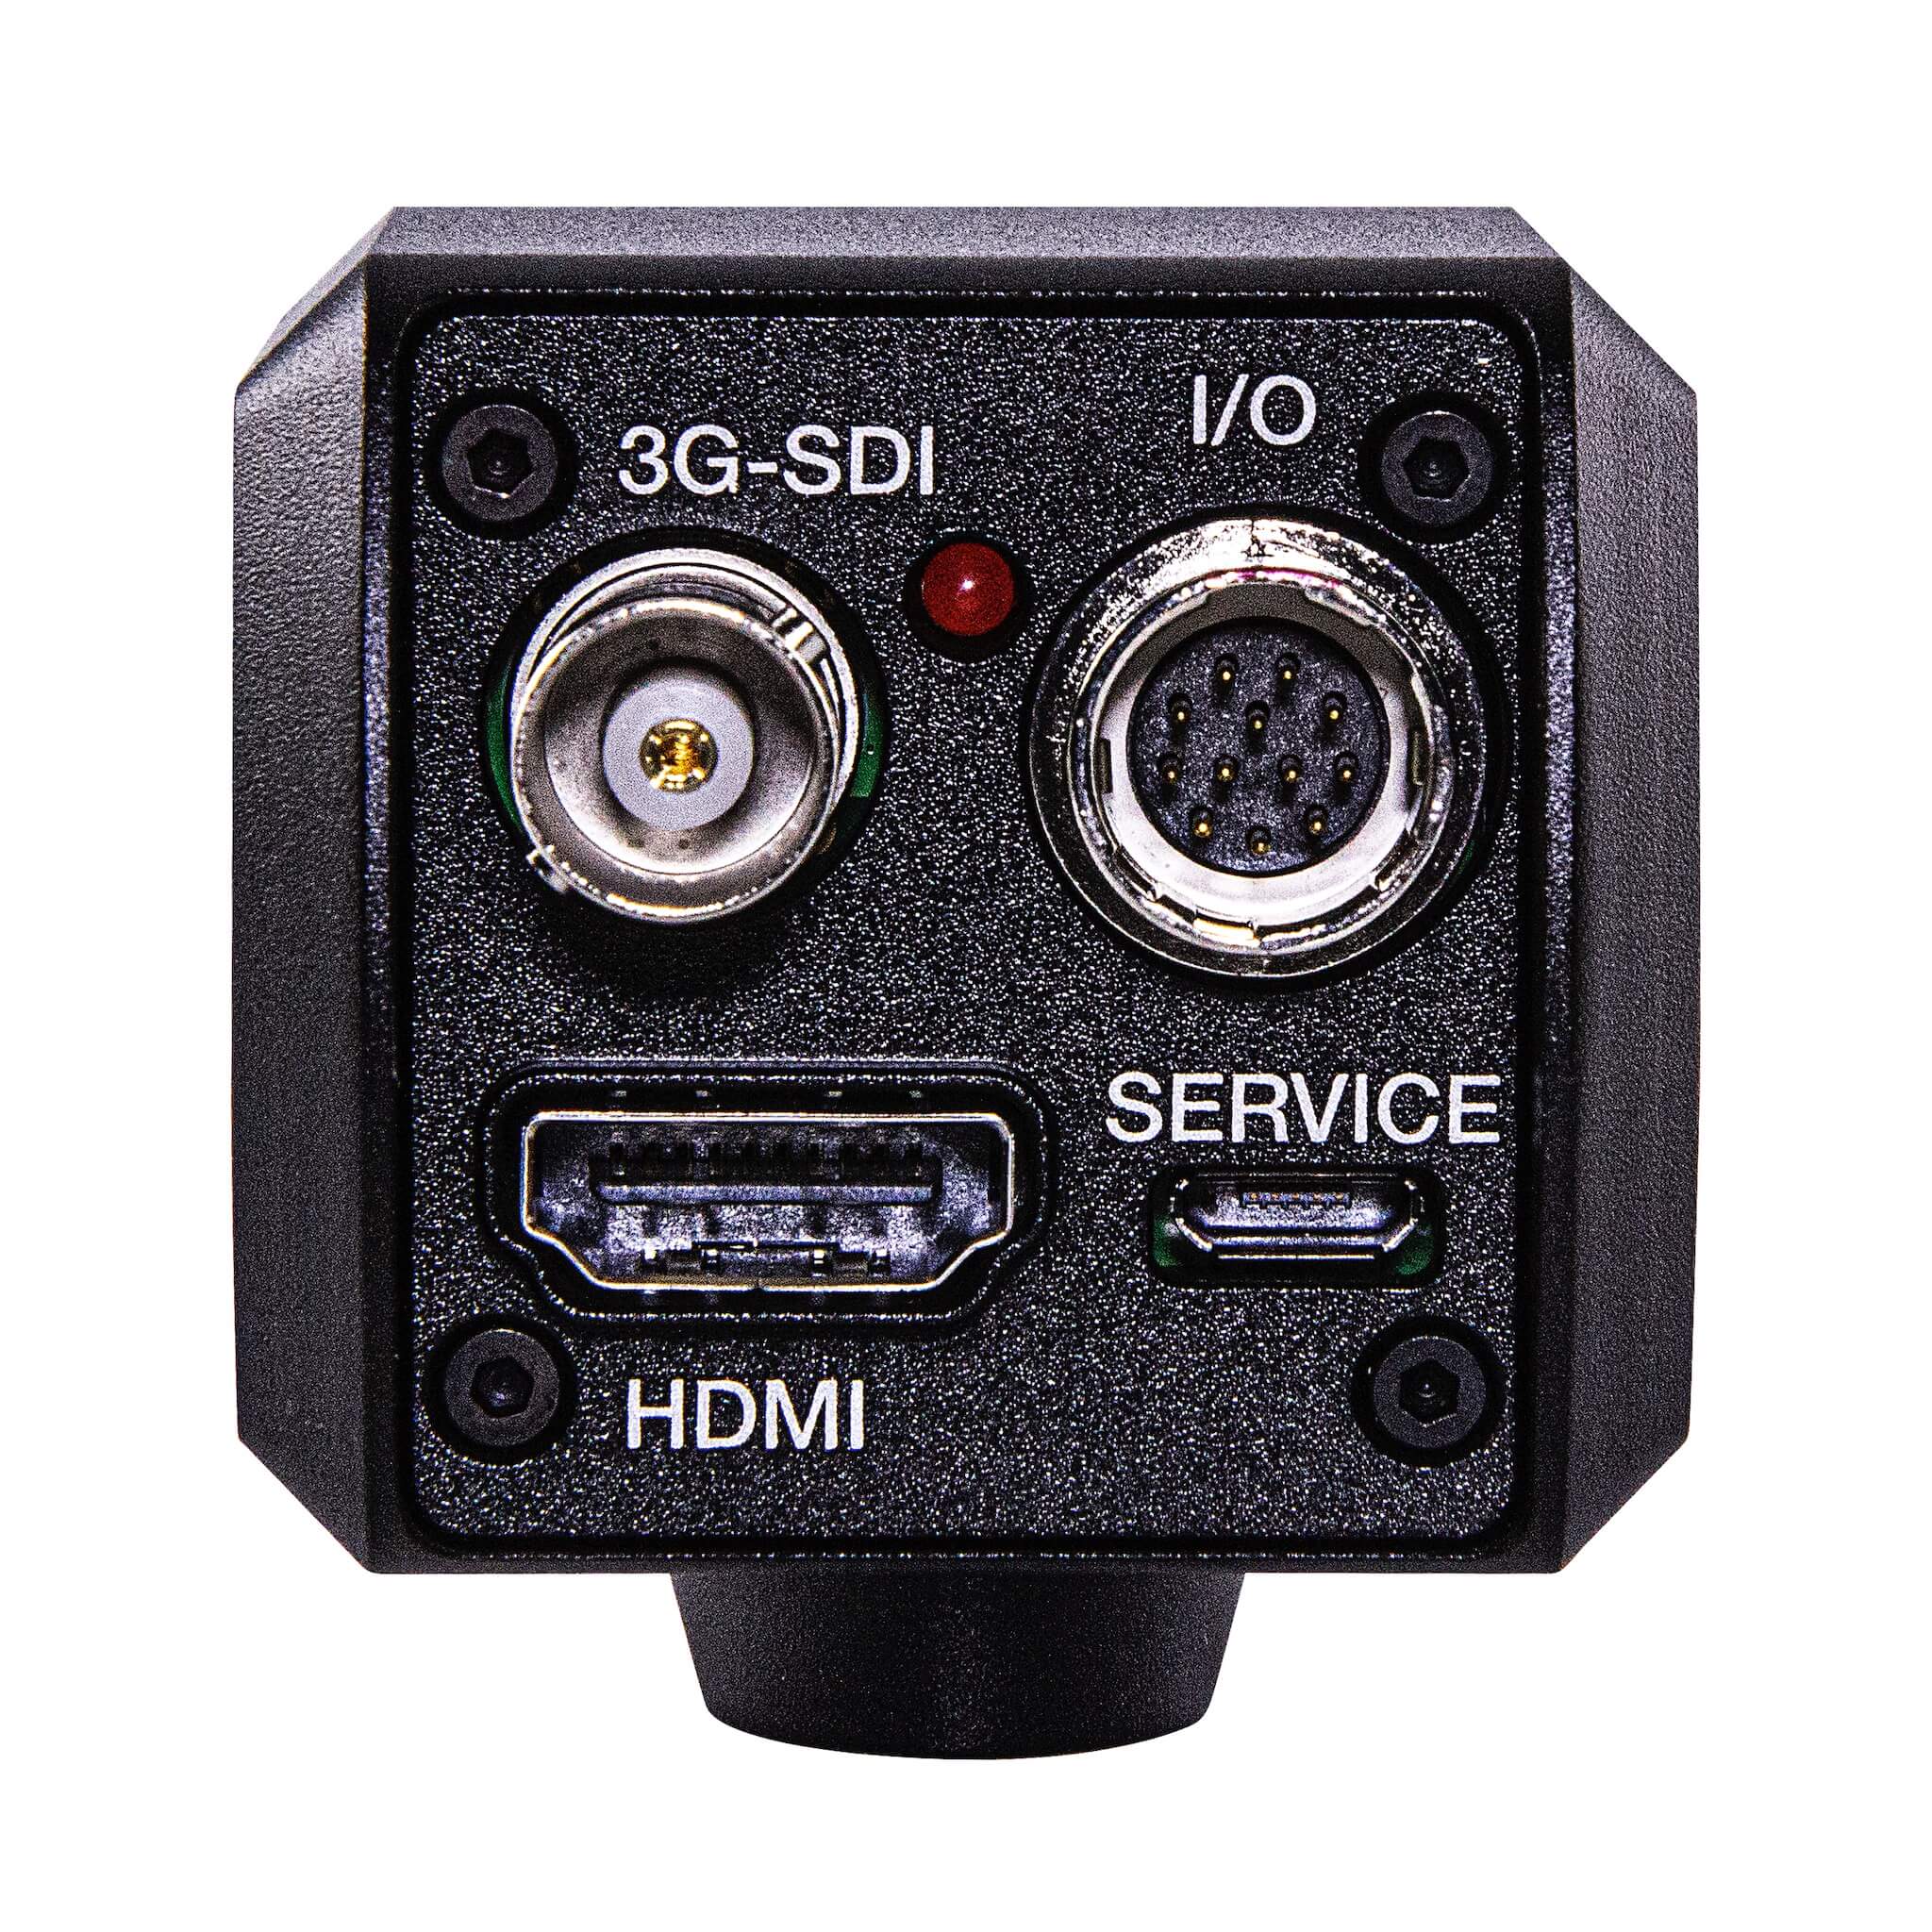 Marshall CV508 - Micro Full-HD POV Video Camera with HDMI/3GSDI, back